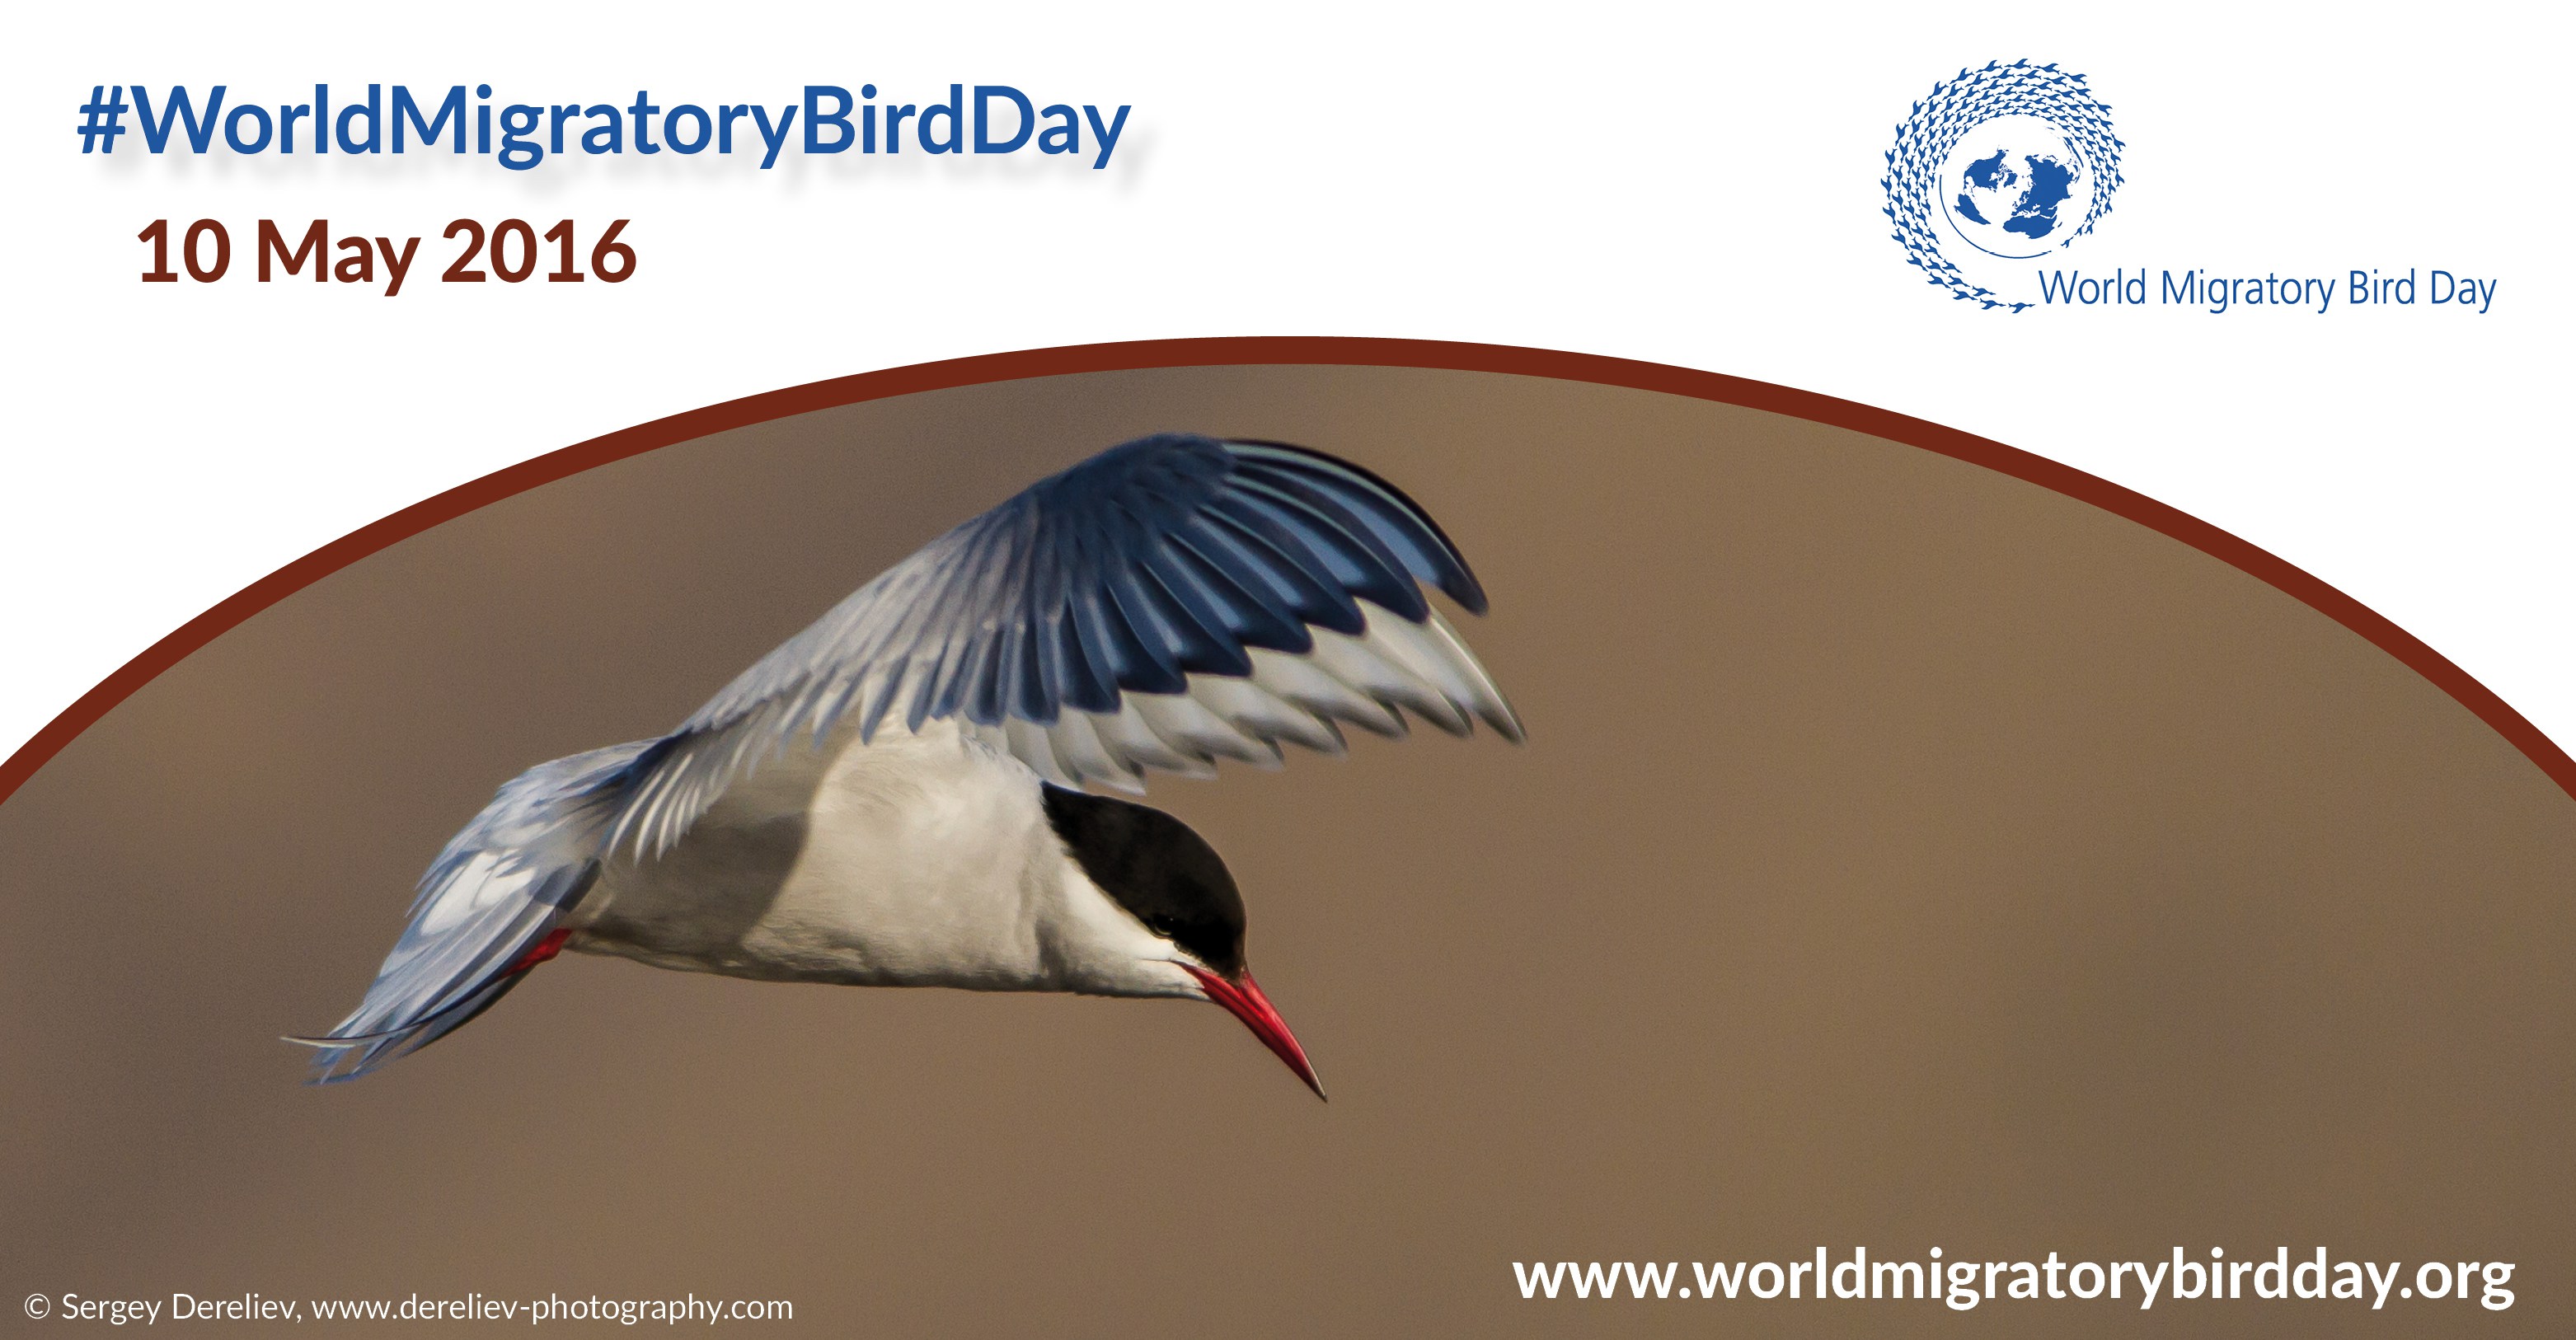 Image: World Migratory Bird Day